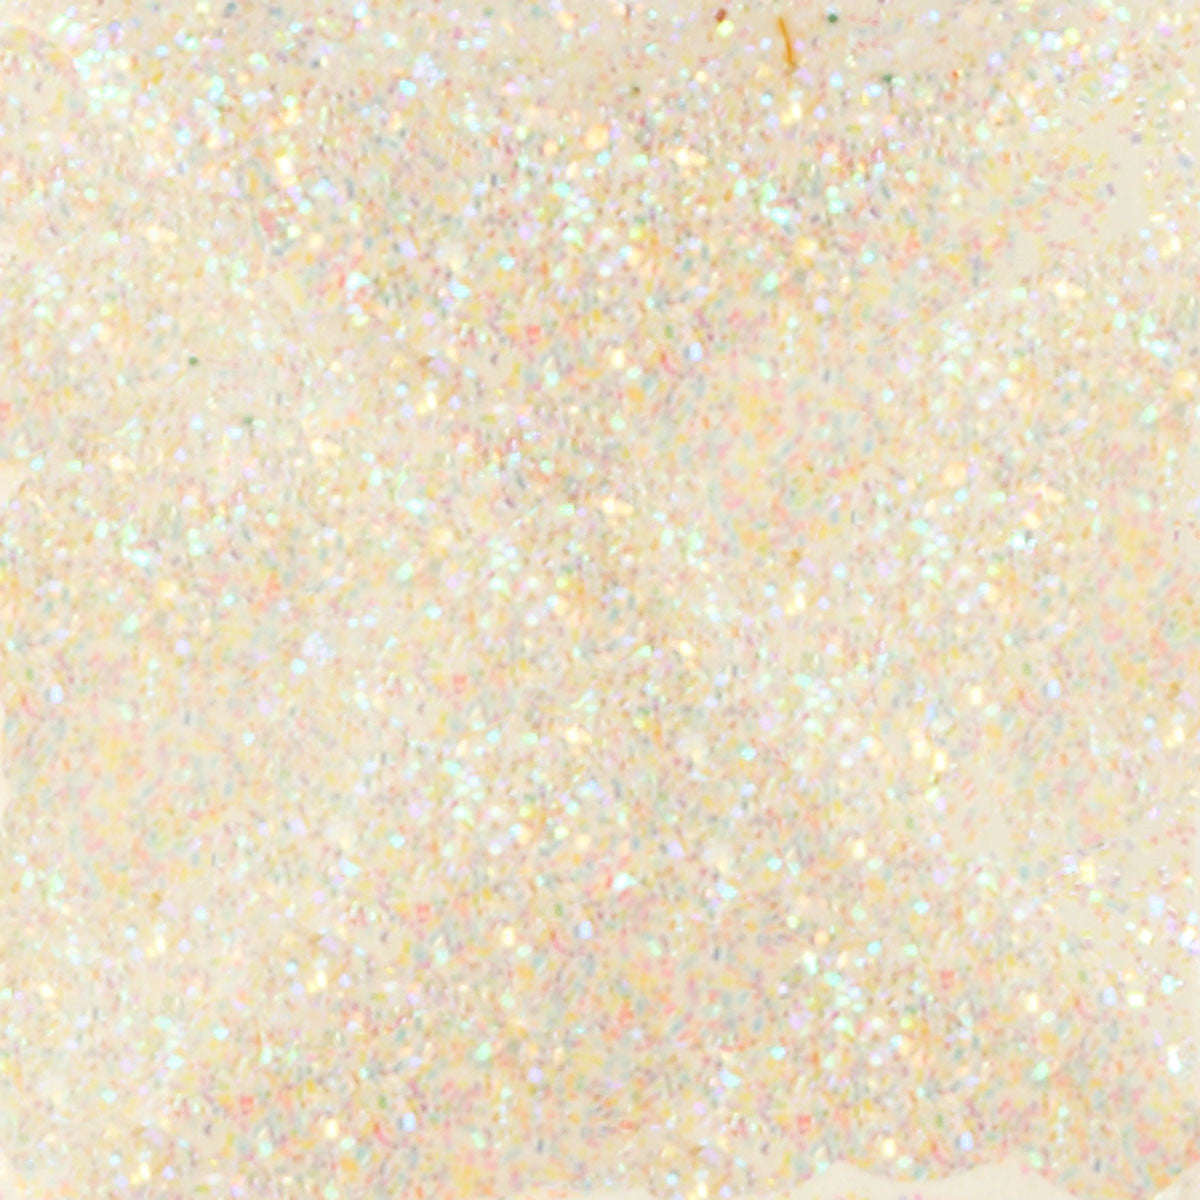 Duncan SG880 Crystal Sparklers Brush-On Glitter, 2 oz